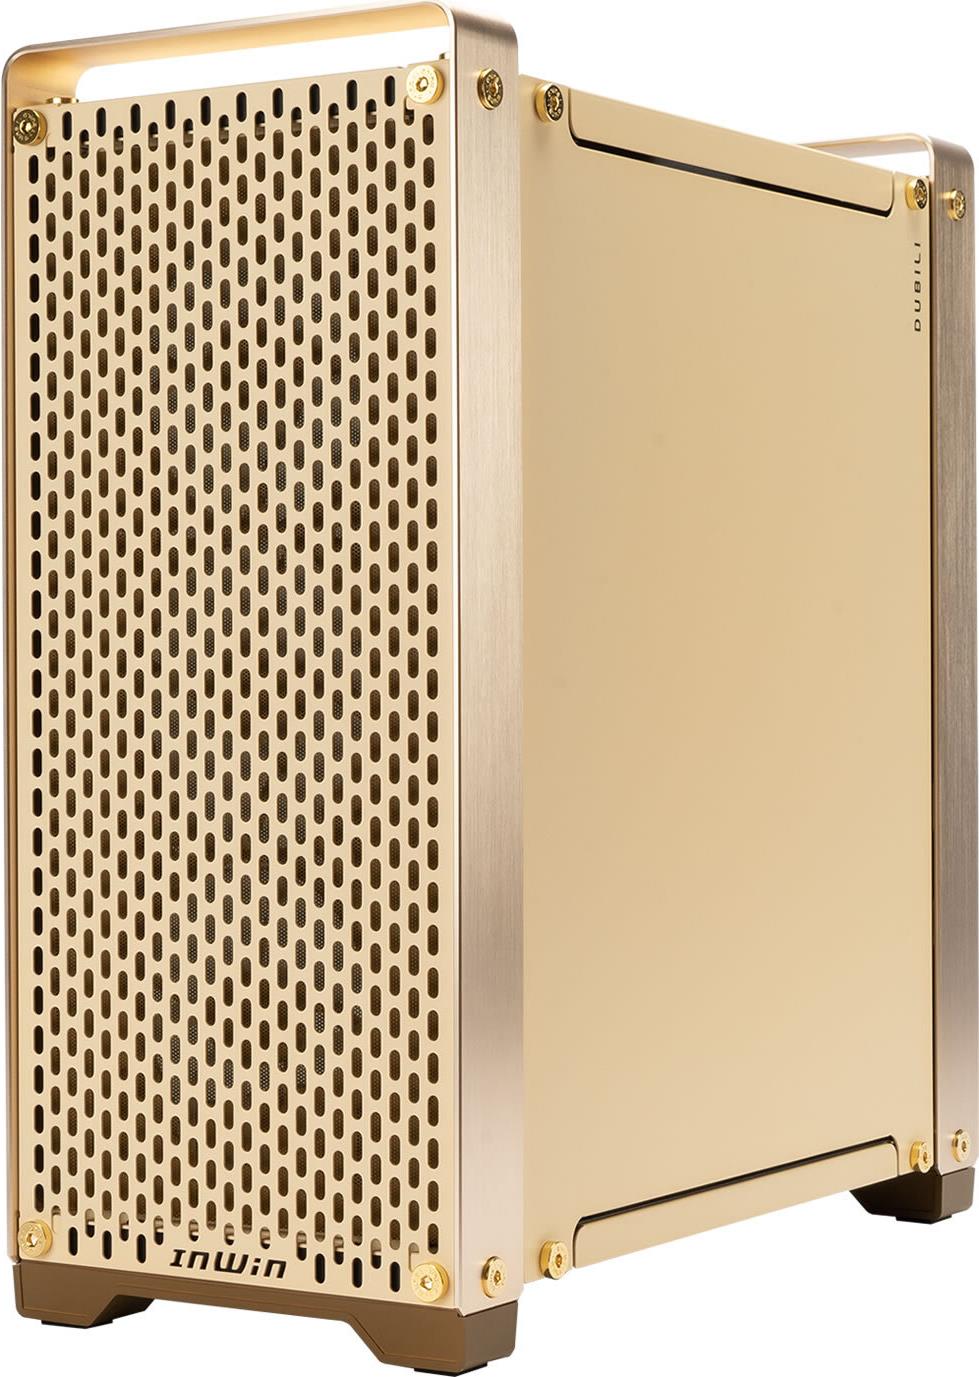 In Win DUBILI GOLD - Full Tower - PC - Gold - ATX - EATX - micro ATX - Mini-ITX - Aluminium - Gehärtetes Glas - 16 cm (DUBILI GOLD)